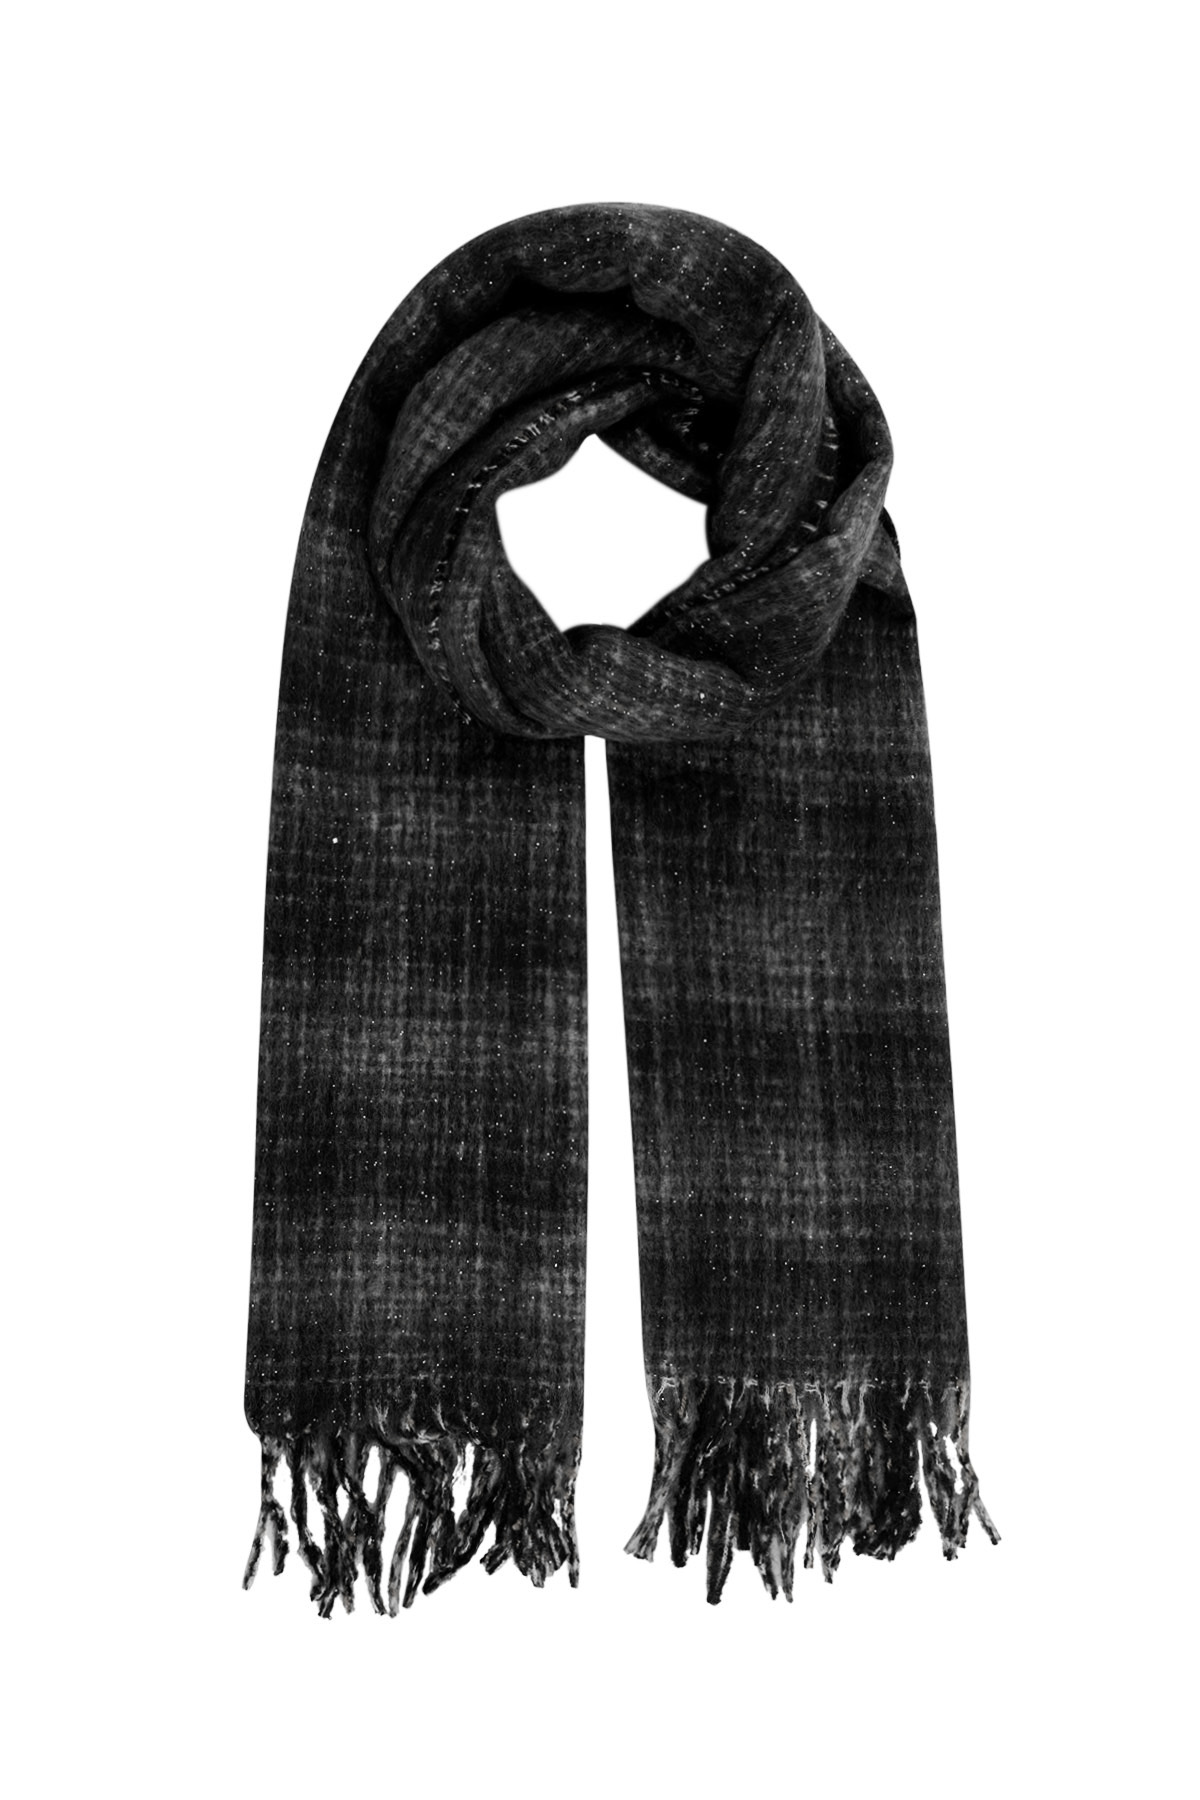 Checked warm winter scarf - black h5 